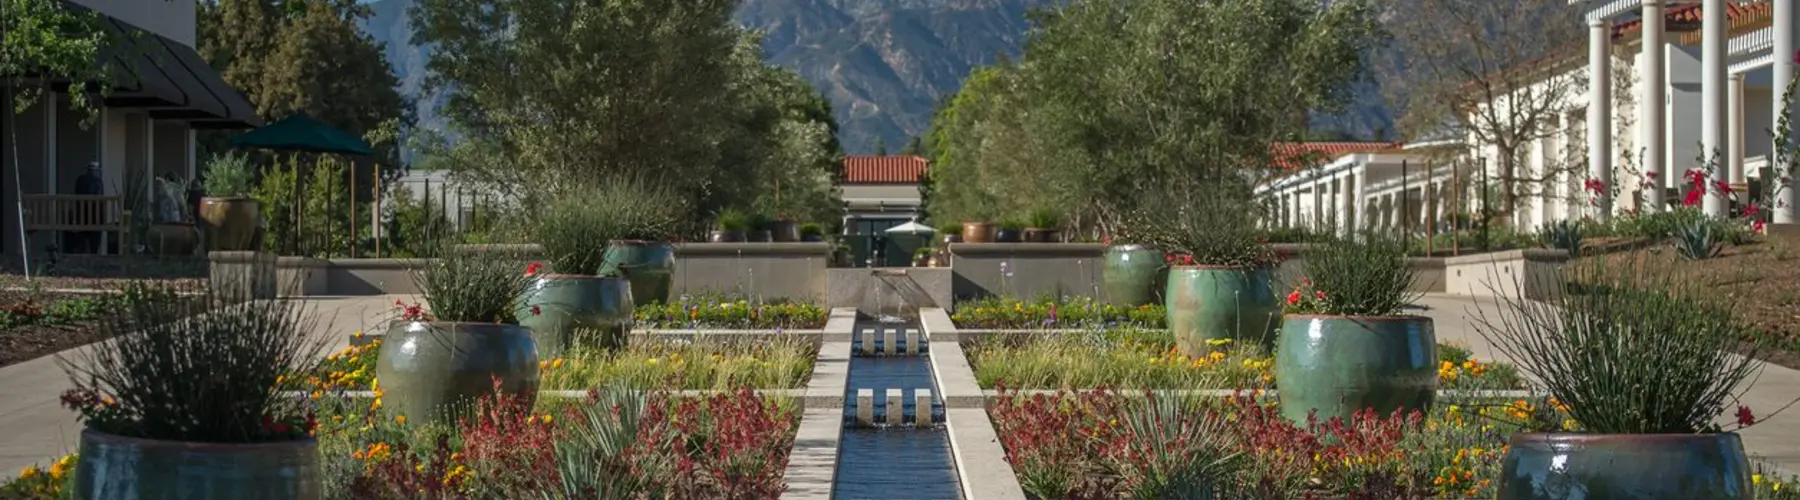 Brody California Garden - water feature